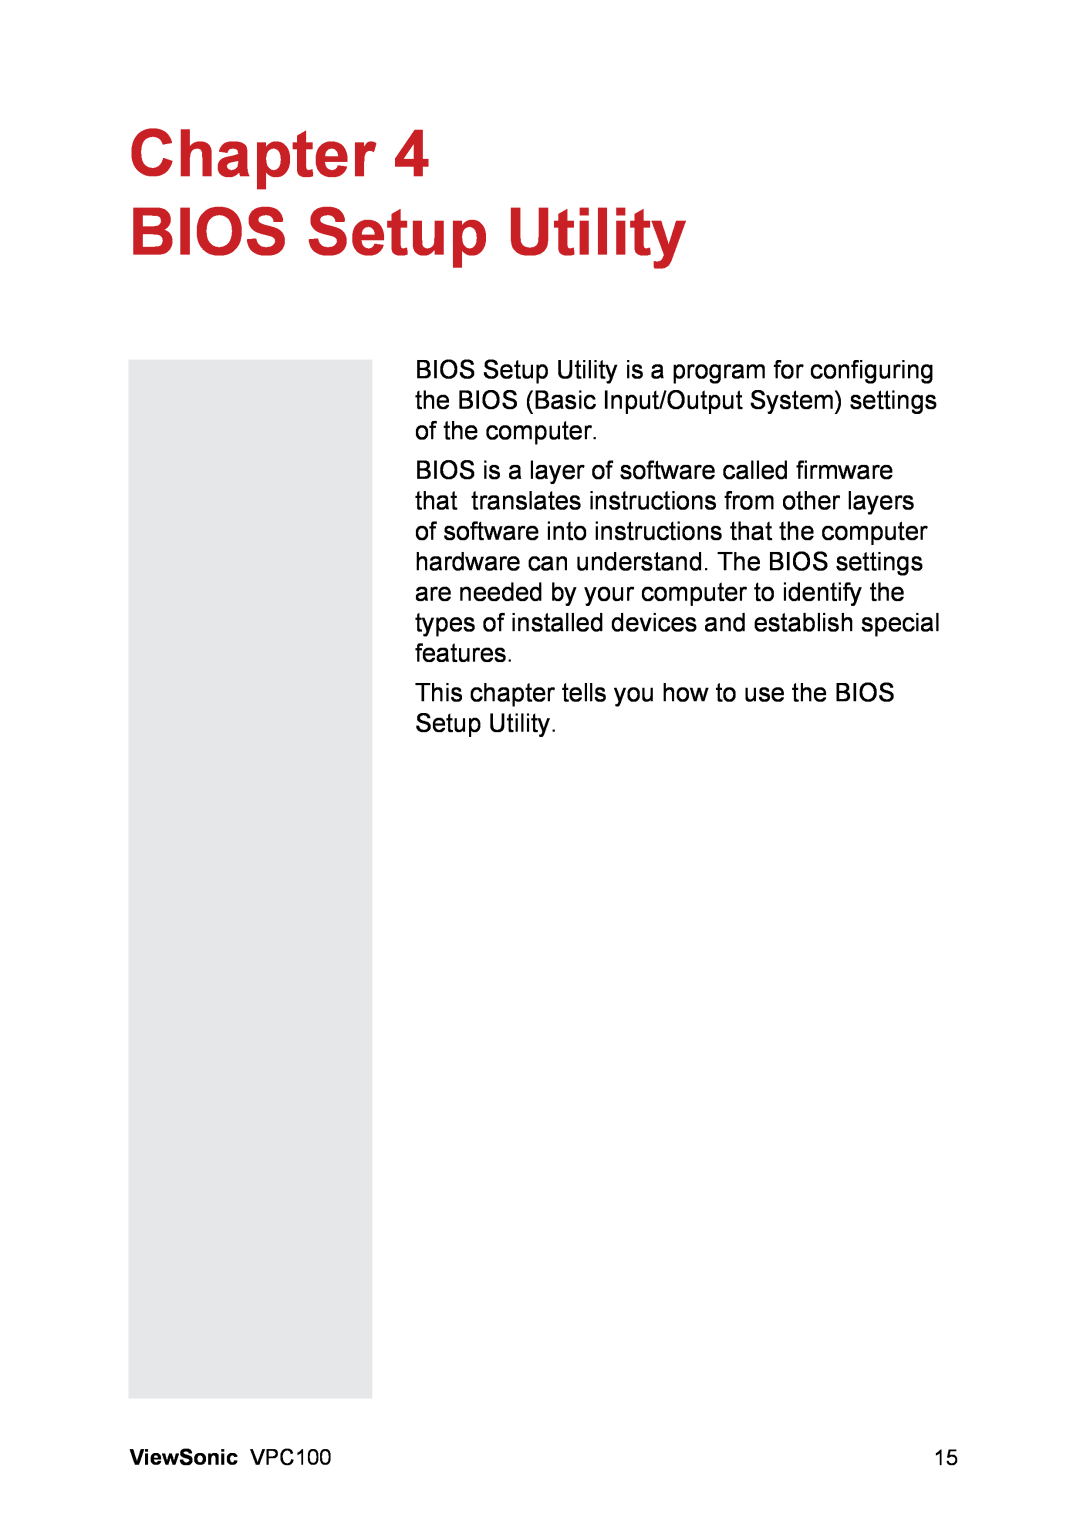 ViewSonic VPC100 manual Chapter BIOS Setup Utility 